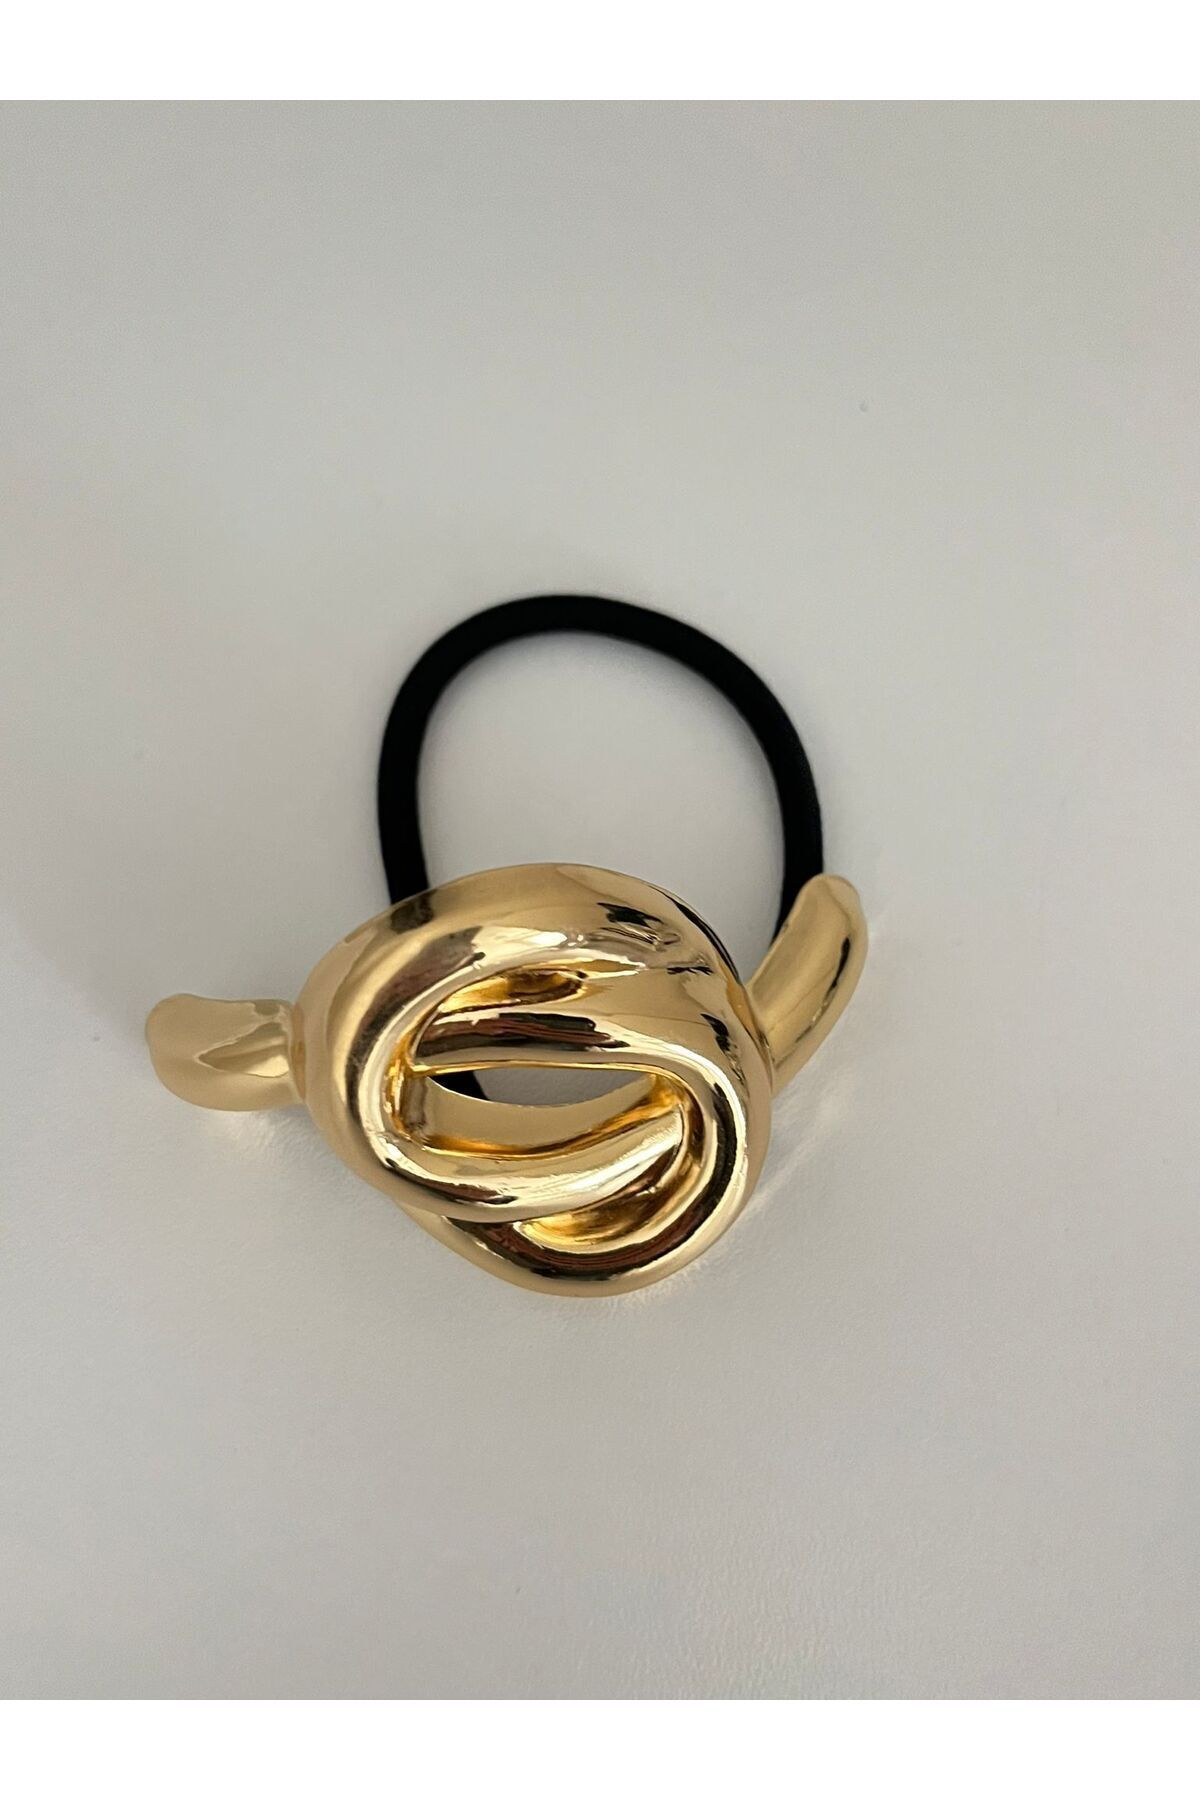 Rachel Gold Düğüm Model Metal Plaka Lastikli At Kuyruğu Tokası